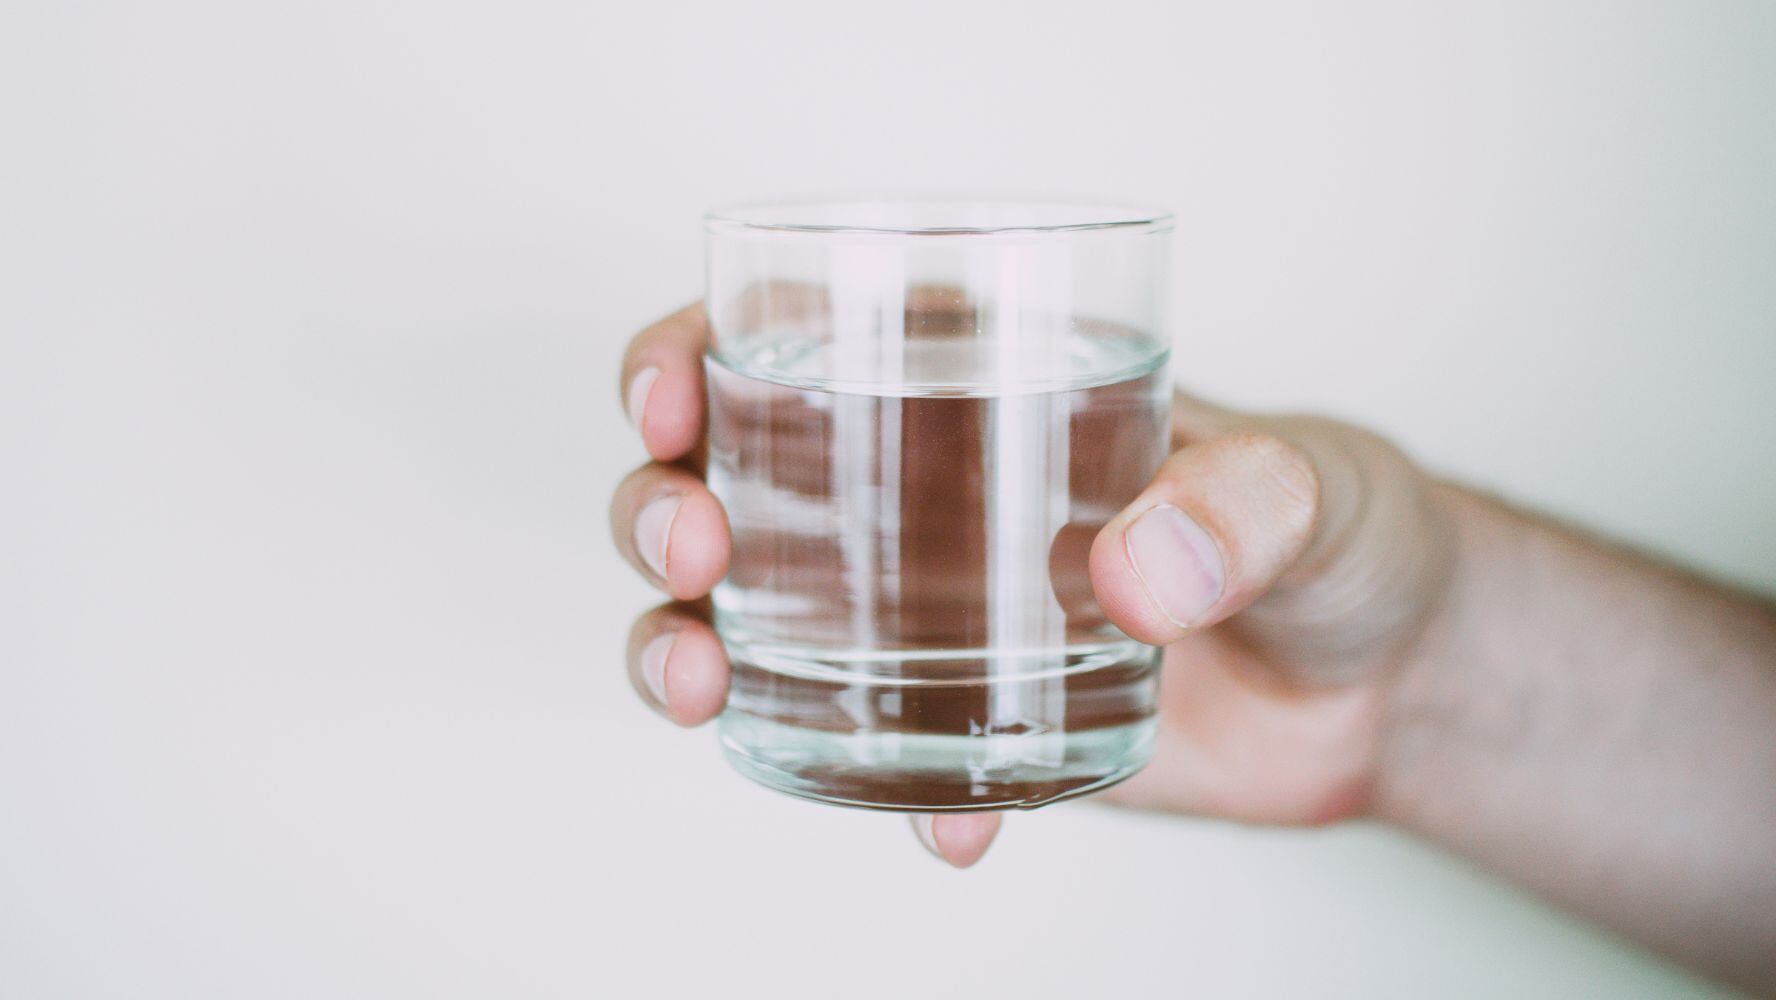 La mejor bebida para hidratar el cuerpo es el agua natural. (Foto: Pexels)